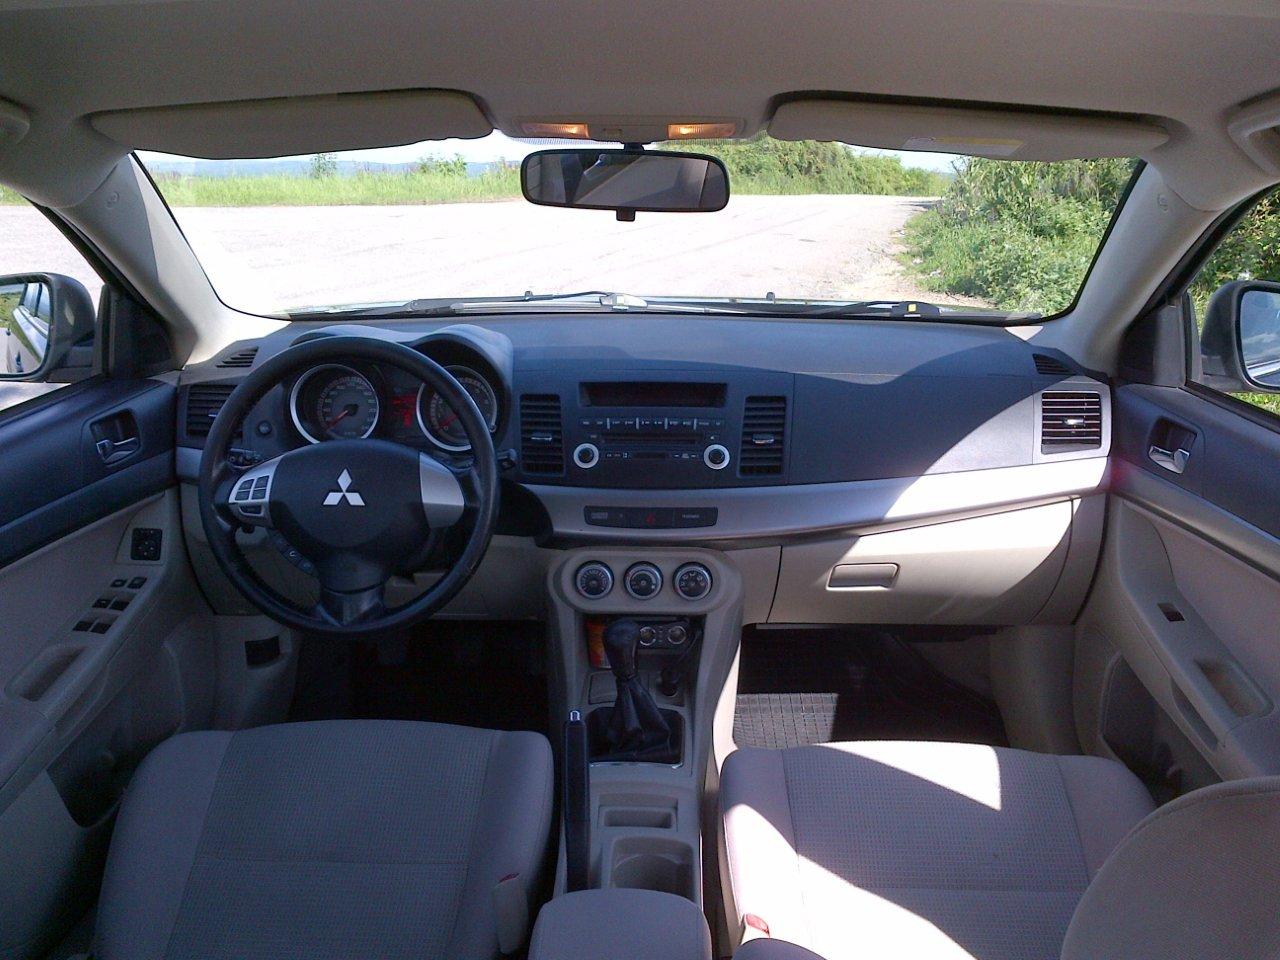 Mitsubishi_Lancer_interior.jpg